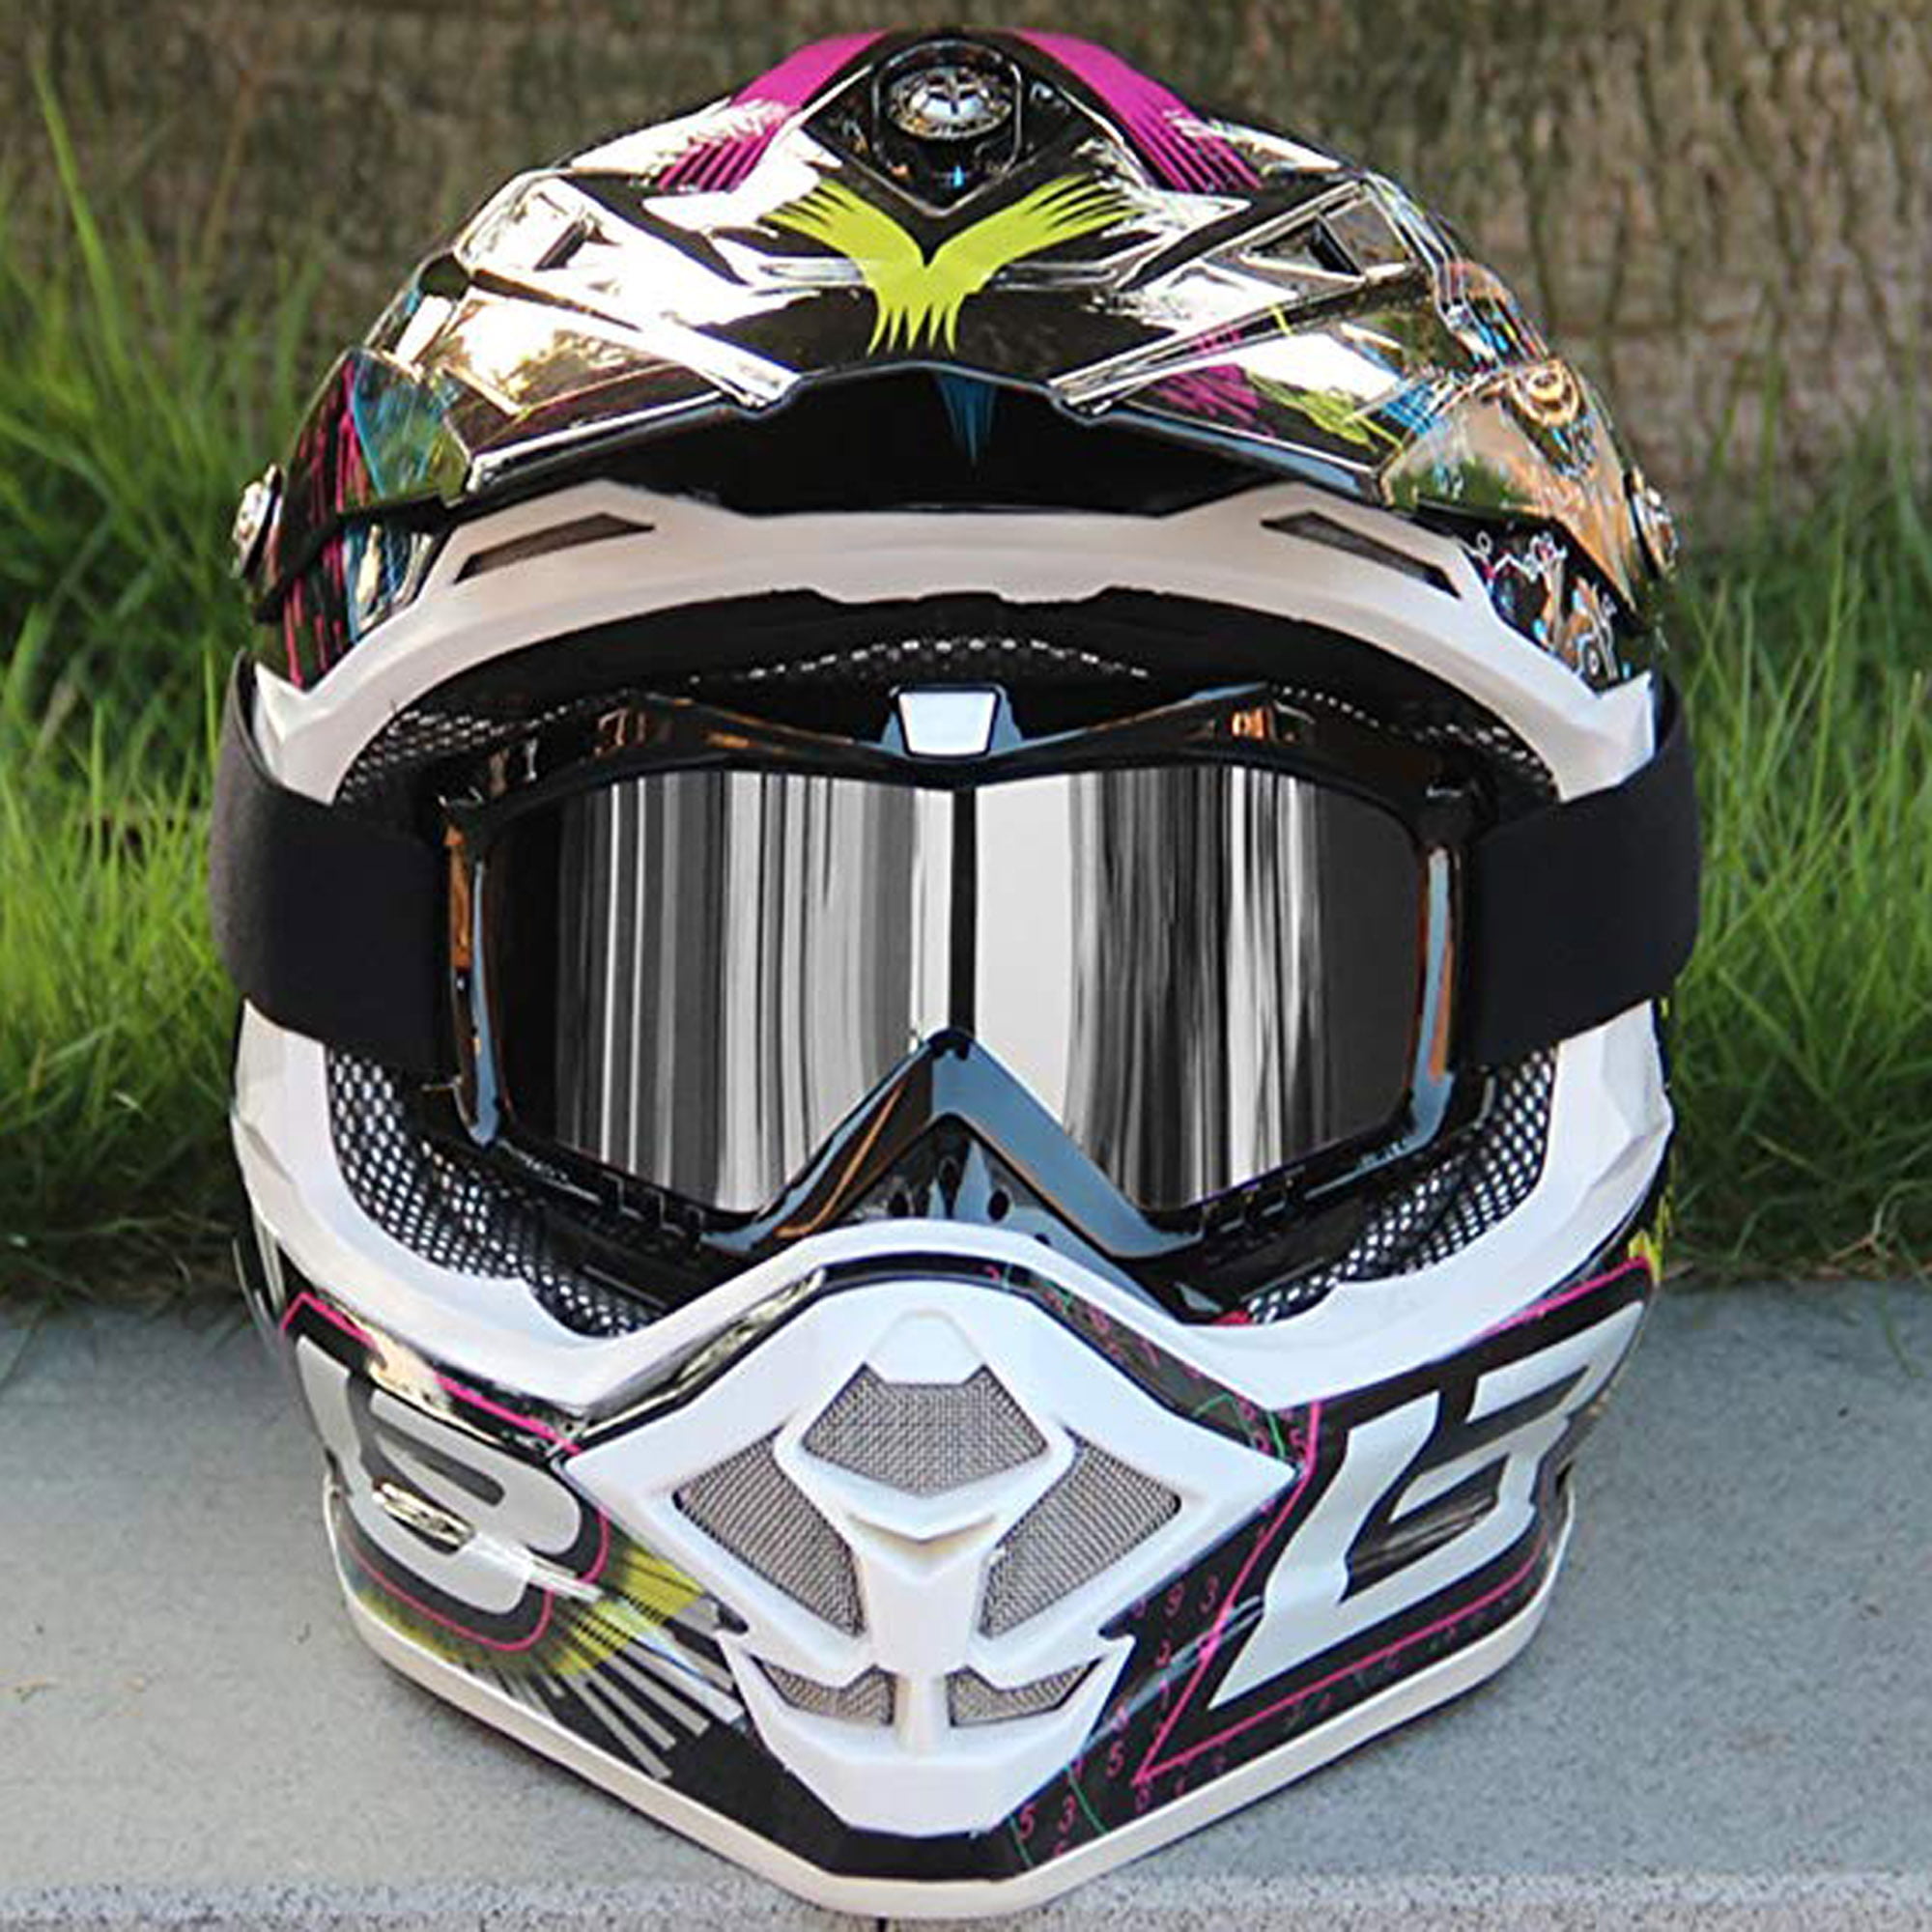 LELINTA Adult Motorcycle Motocross Goggles ATV Racing Goggles Dirt 